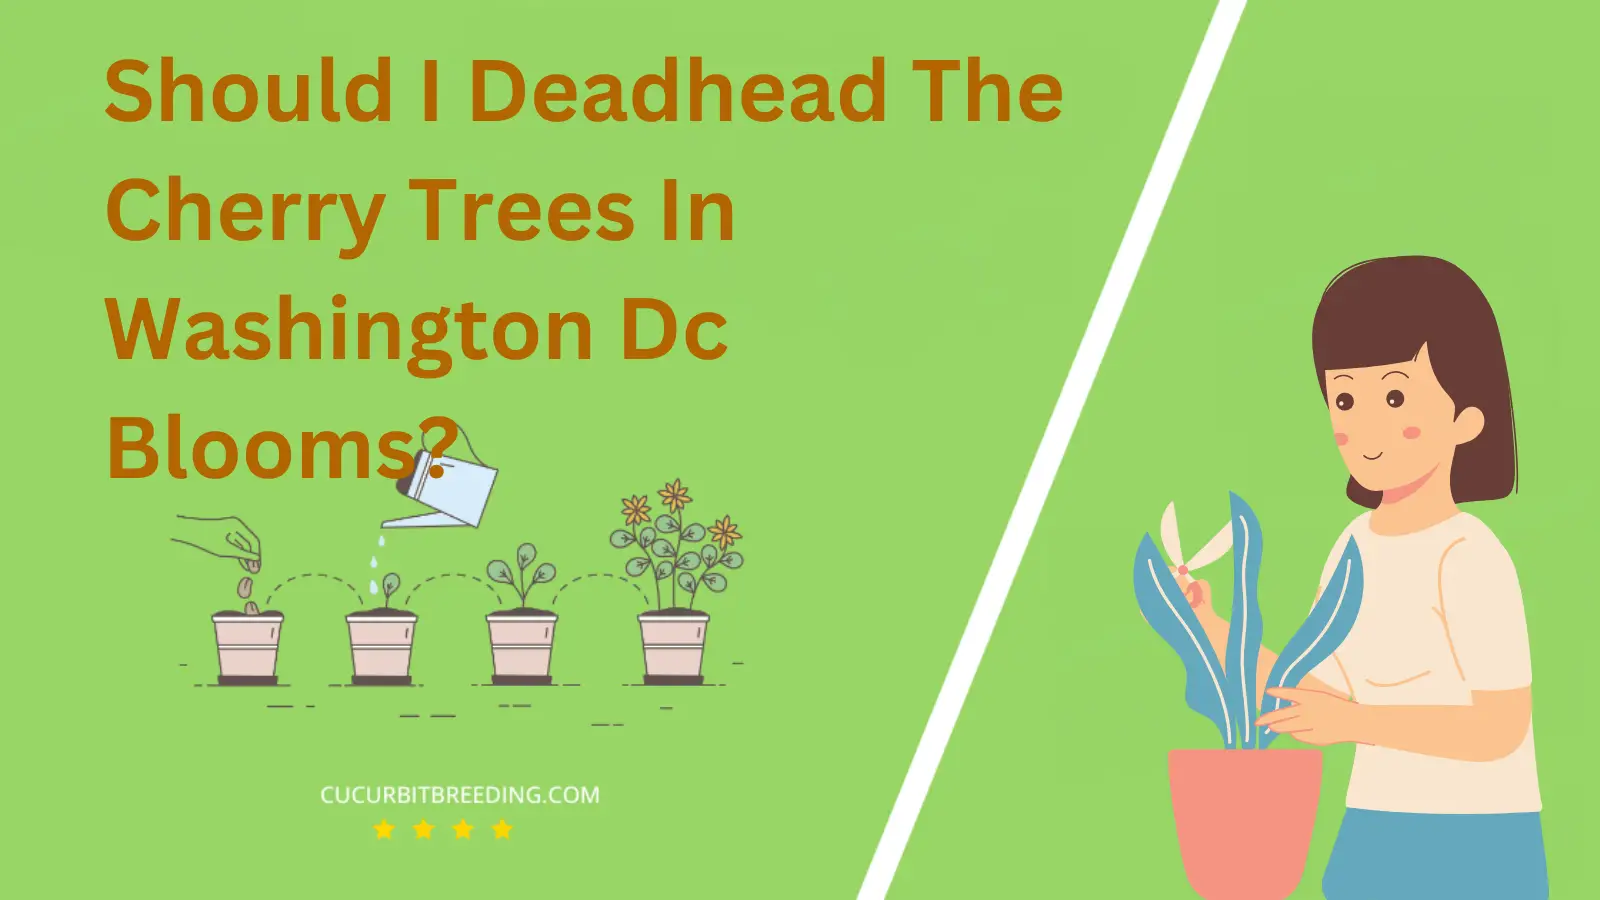 Should I Deadhead The Cherry Trees In Washington Dc Blooms?